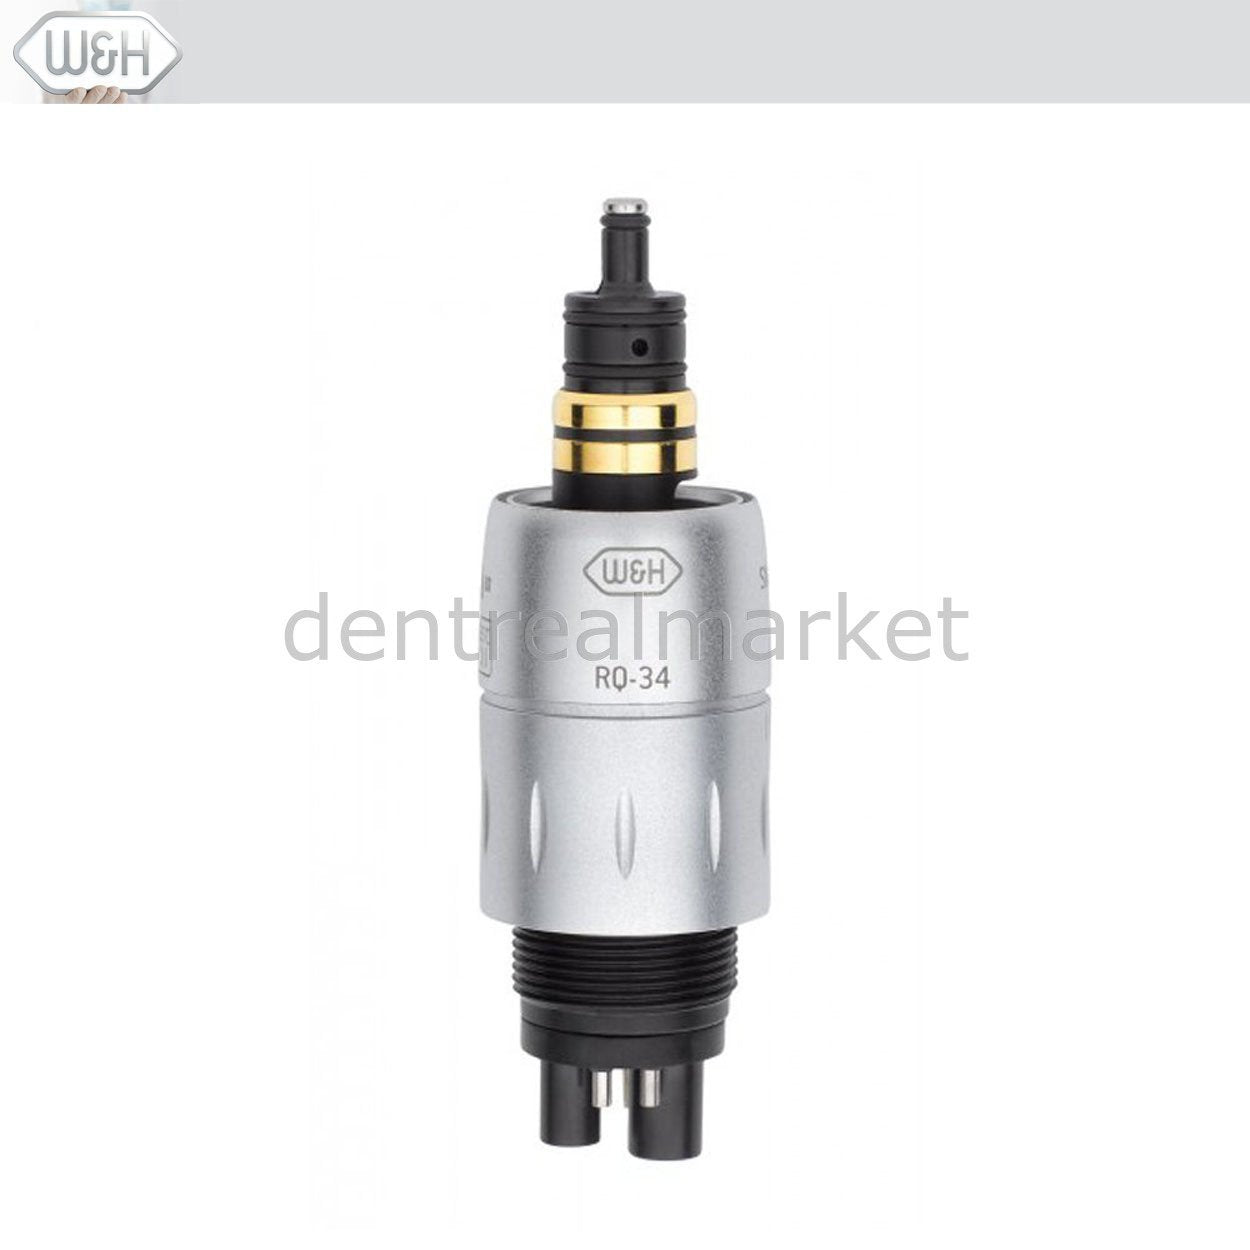 DentrealStore - W&H Dental RQ-34 RotoQuick Standard 4 Holes Lighted Adjustable Spray Cupling